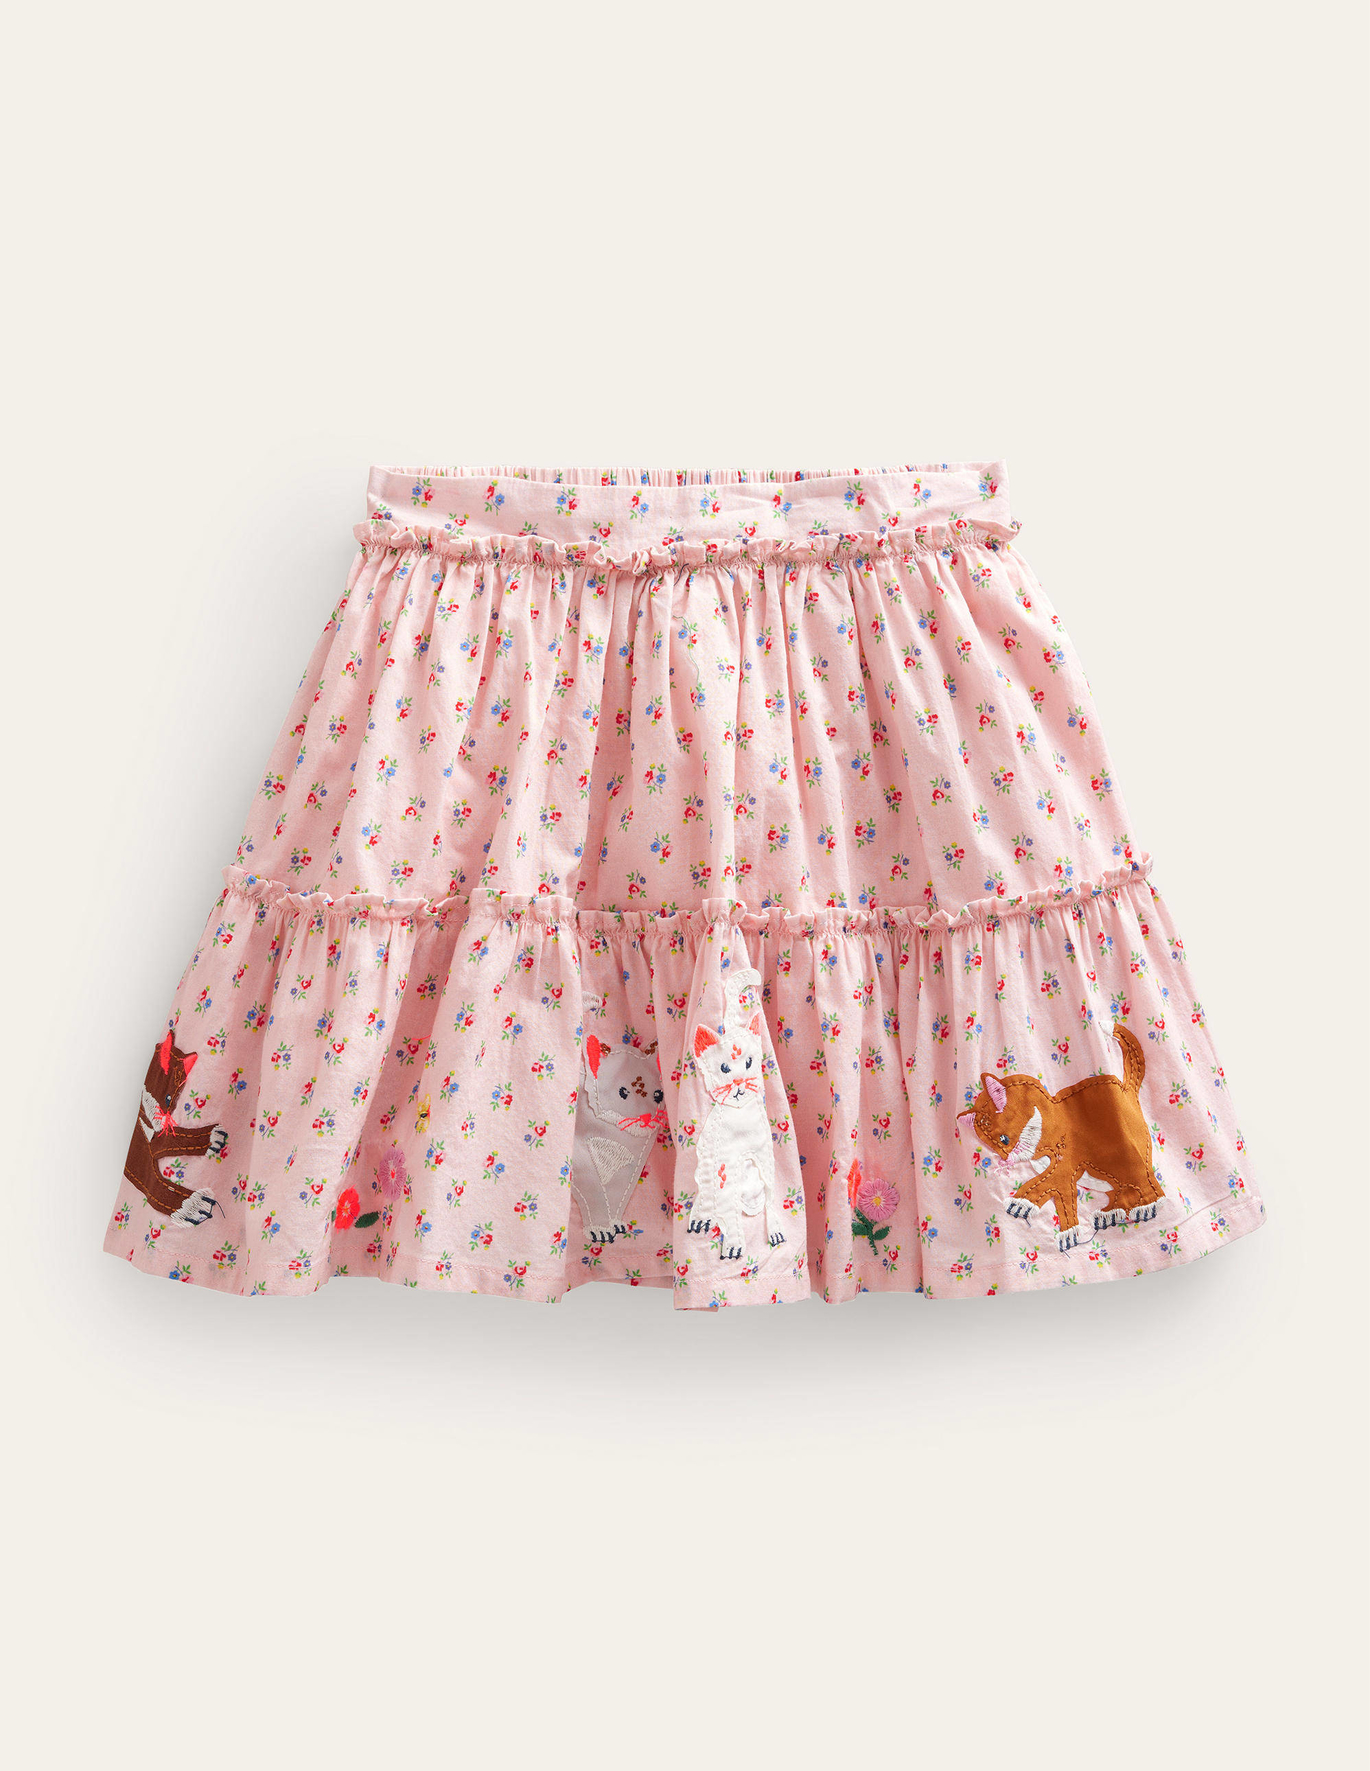 Boden Applique Skirt - Dusty Pink Cats